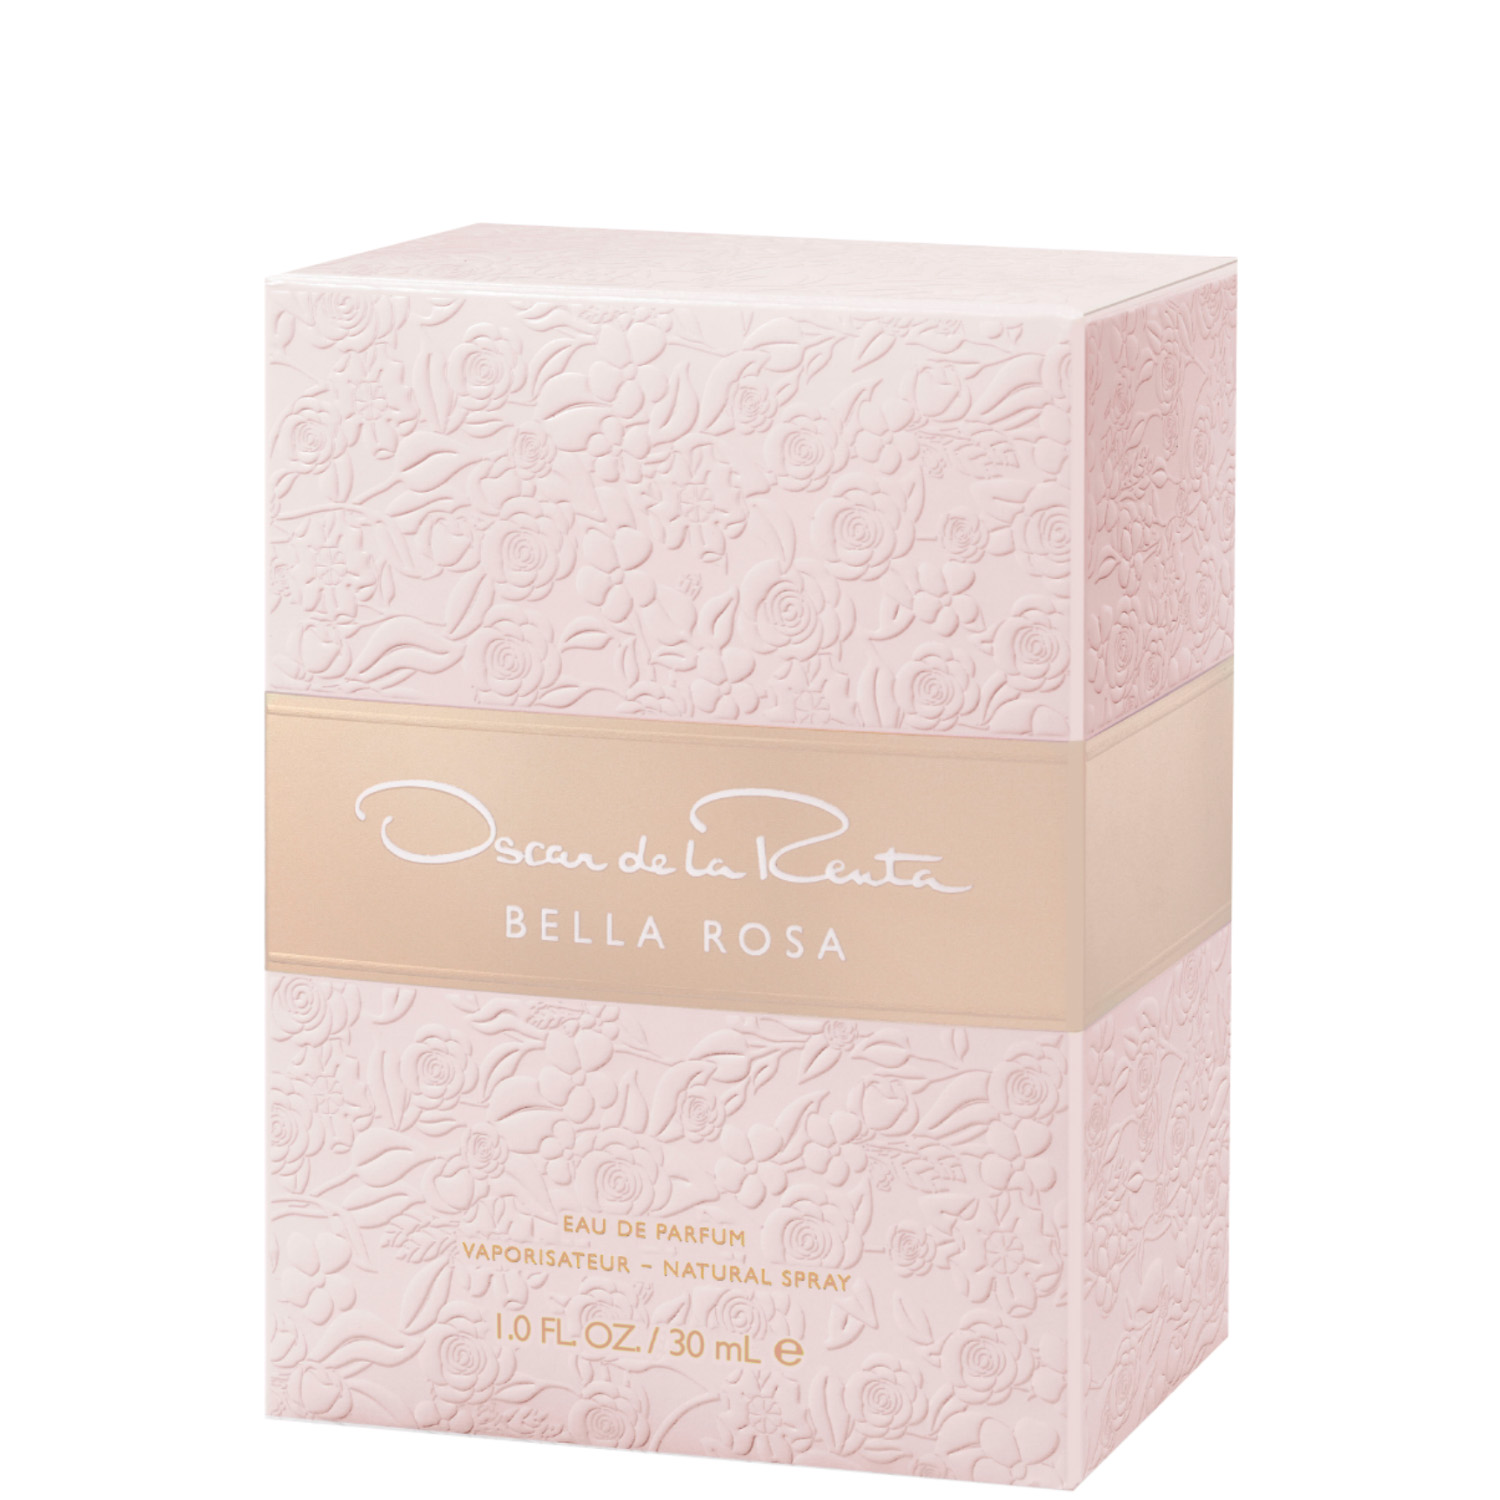 Oscar de la Renta Bella Rosa Eau de Parfum 30ml